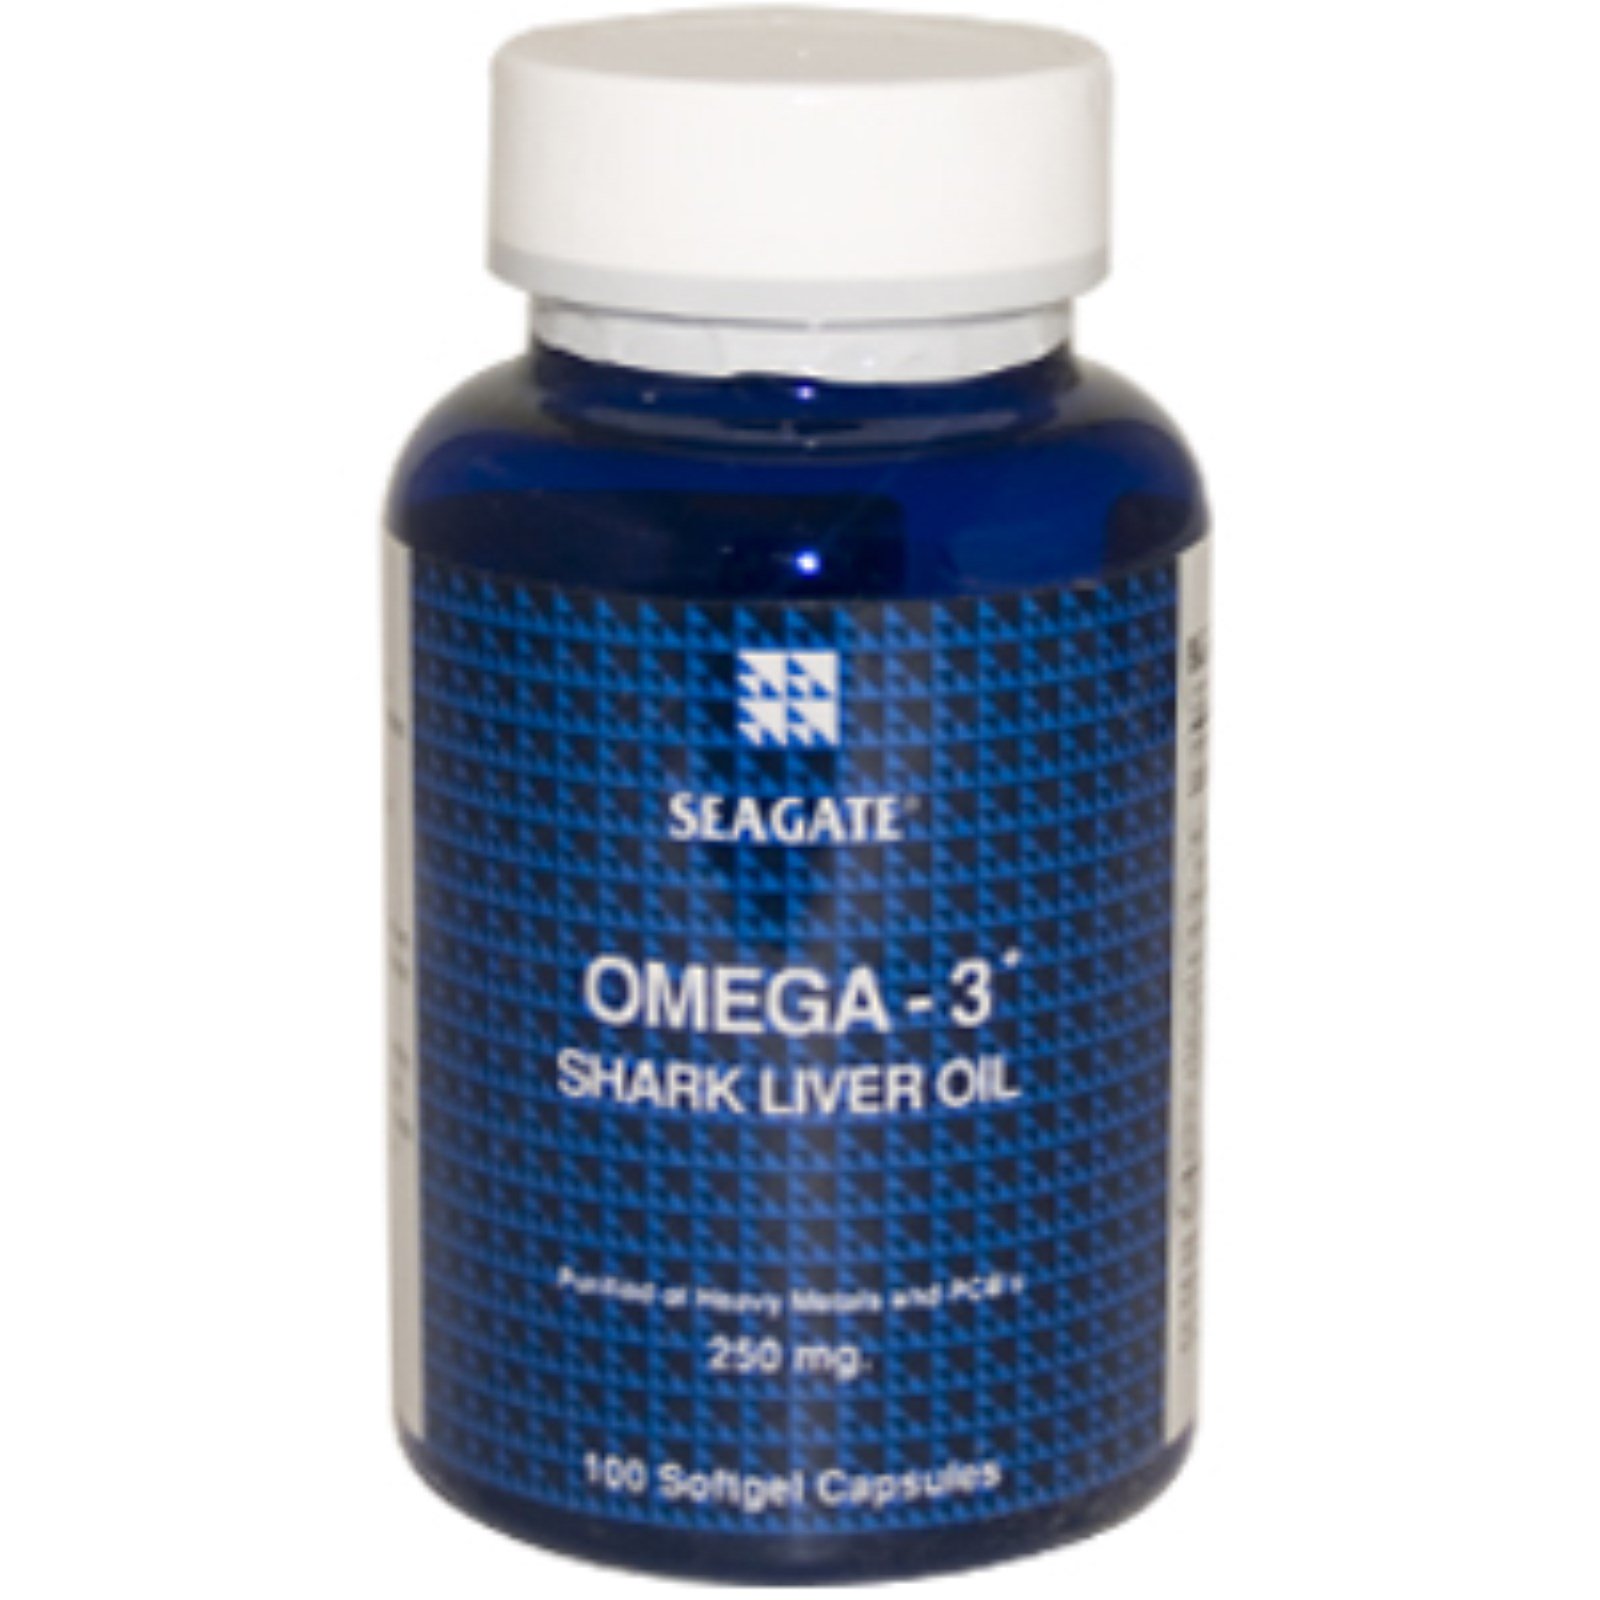 Seagate, Omega-3 + Shark Liver Oil, 250 